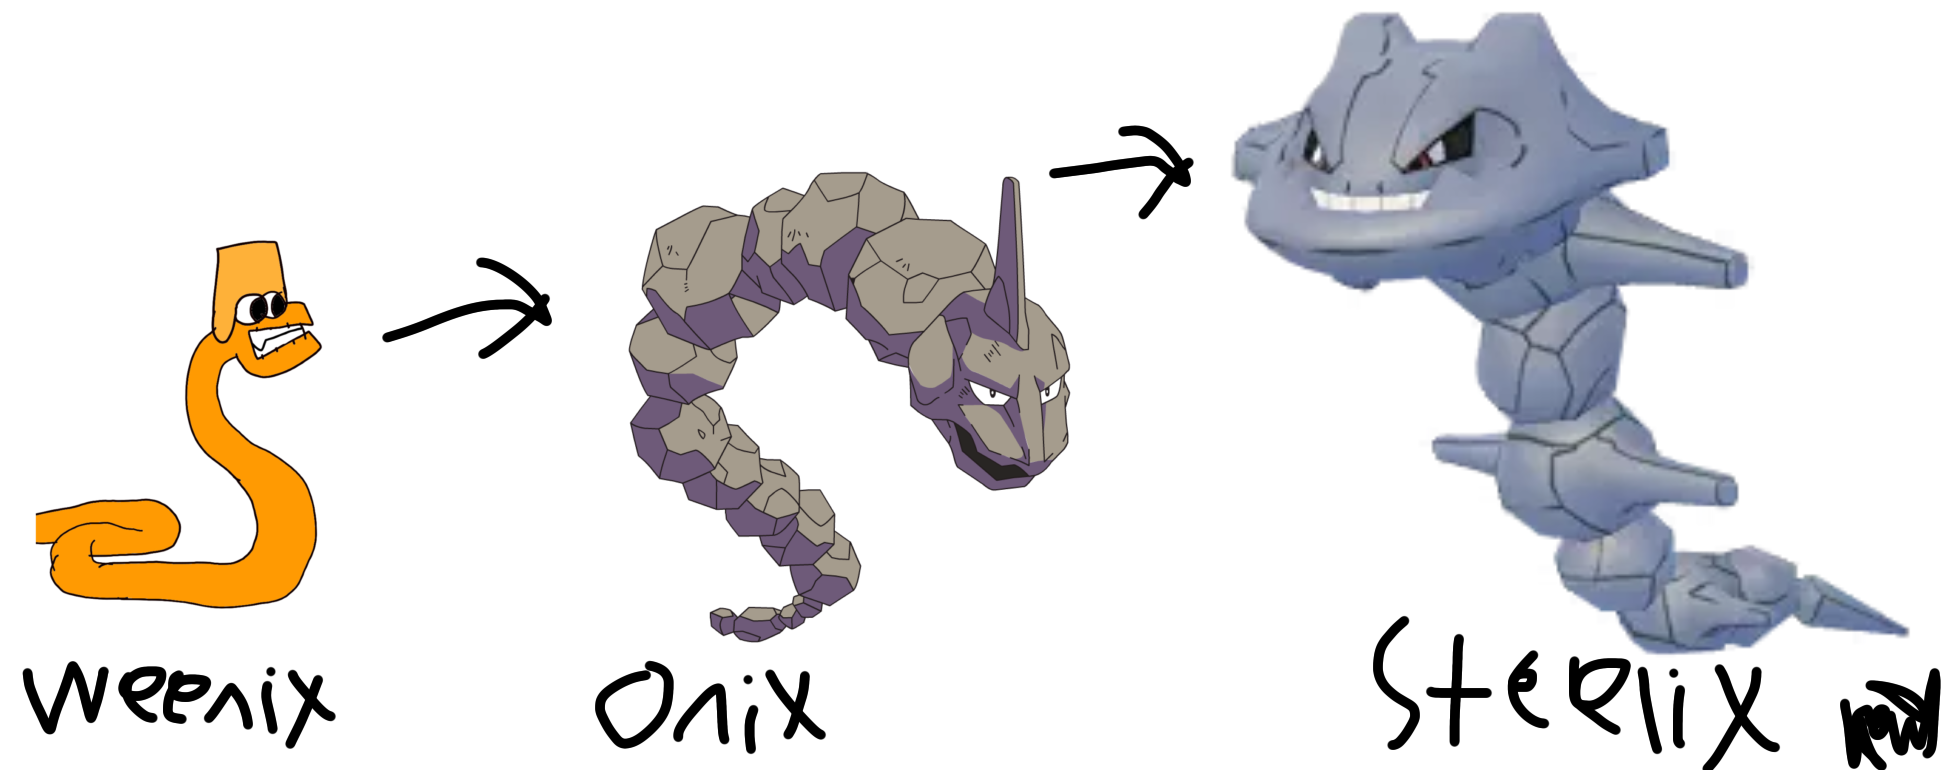 Pokemon Steelix onix